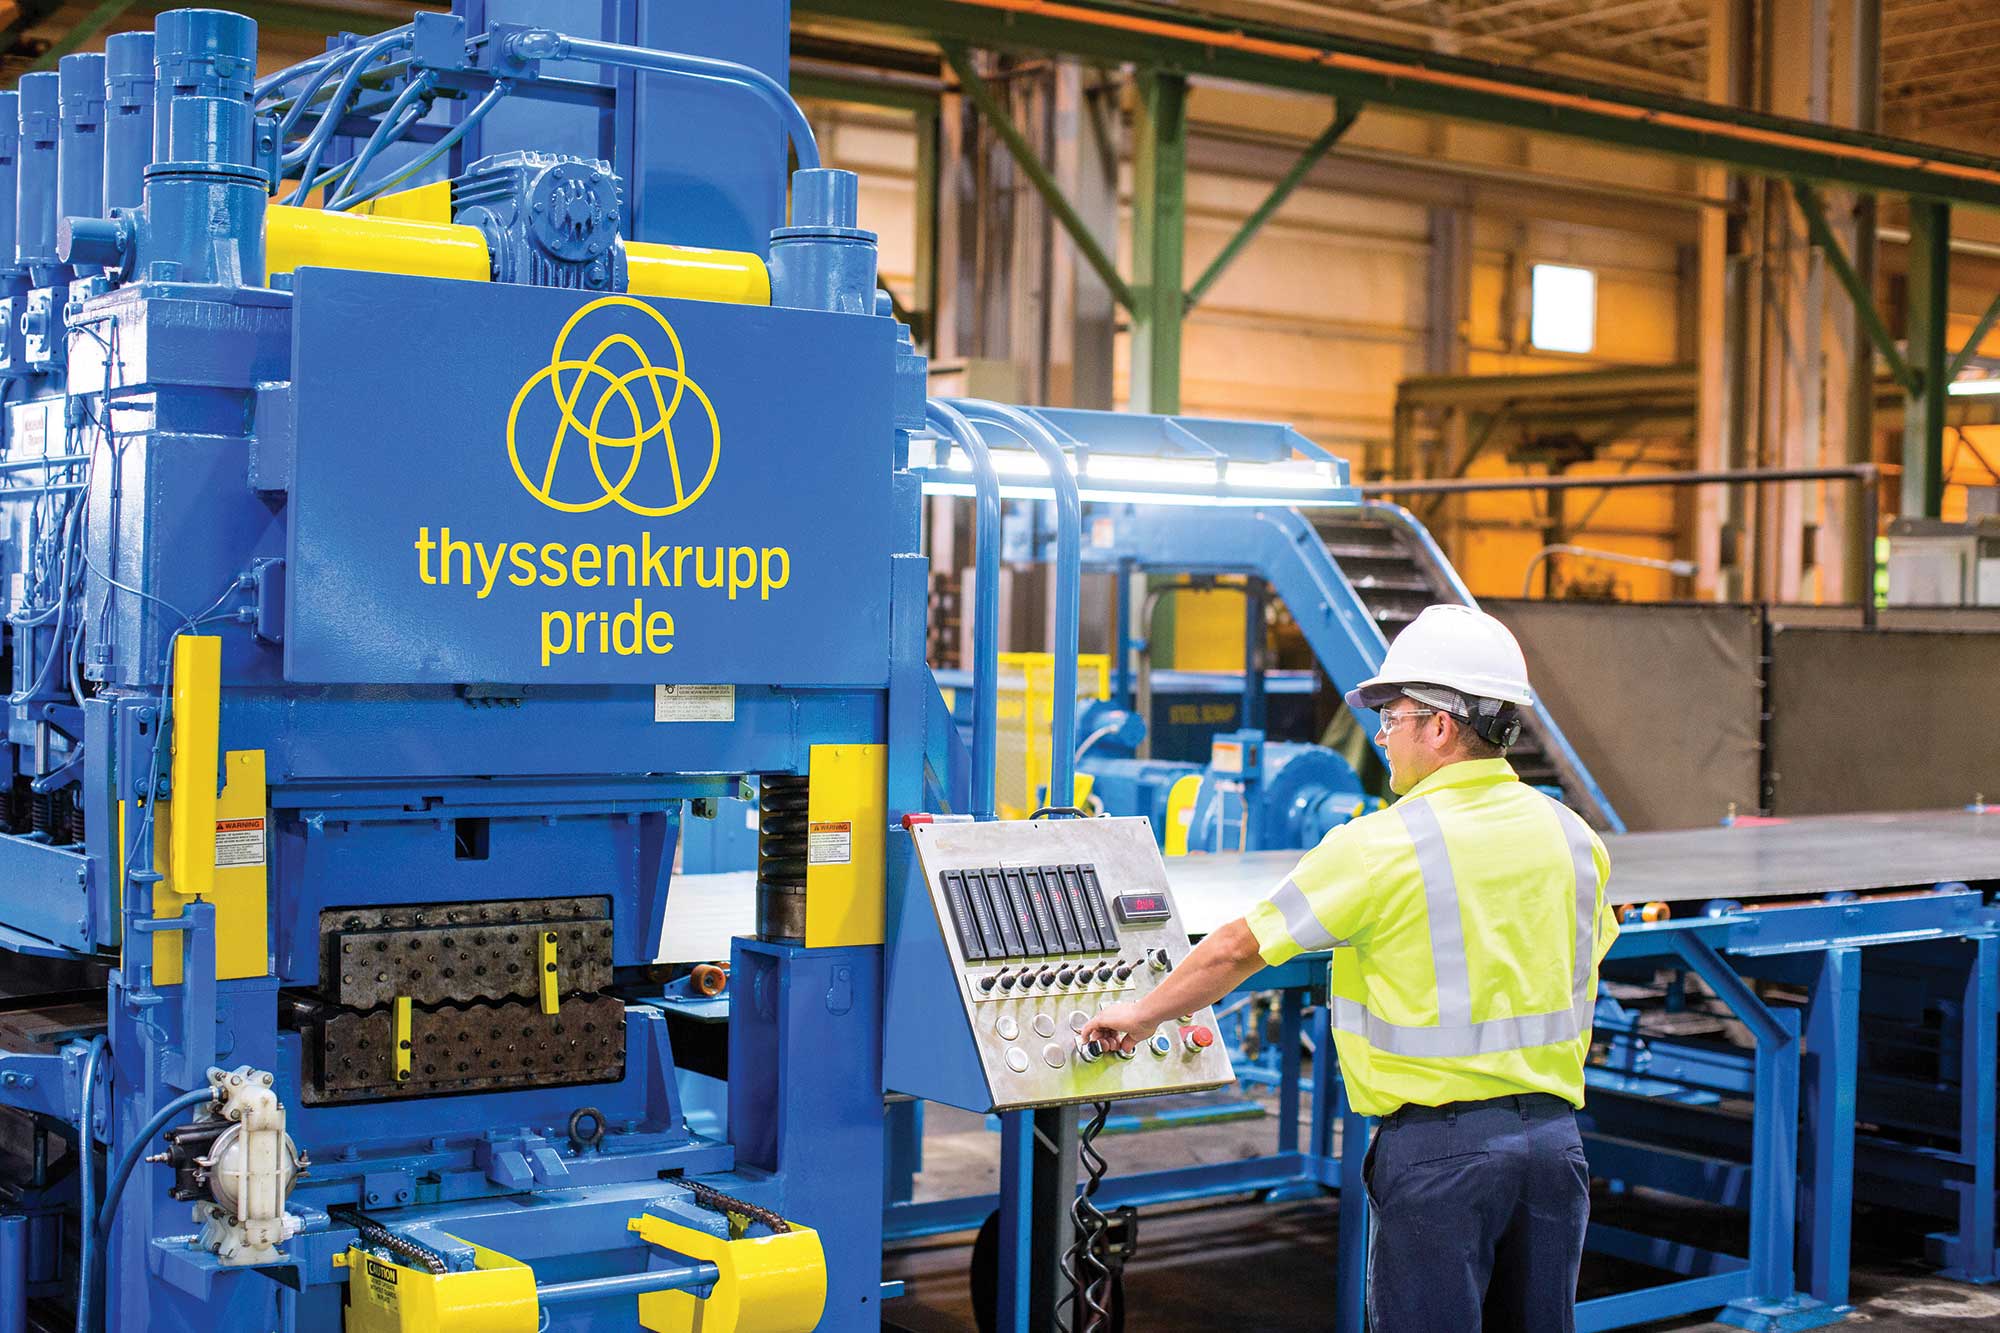 thyssenkrupp pride machine factory